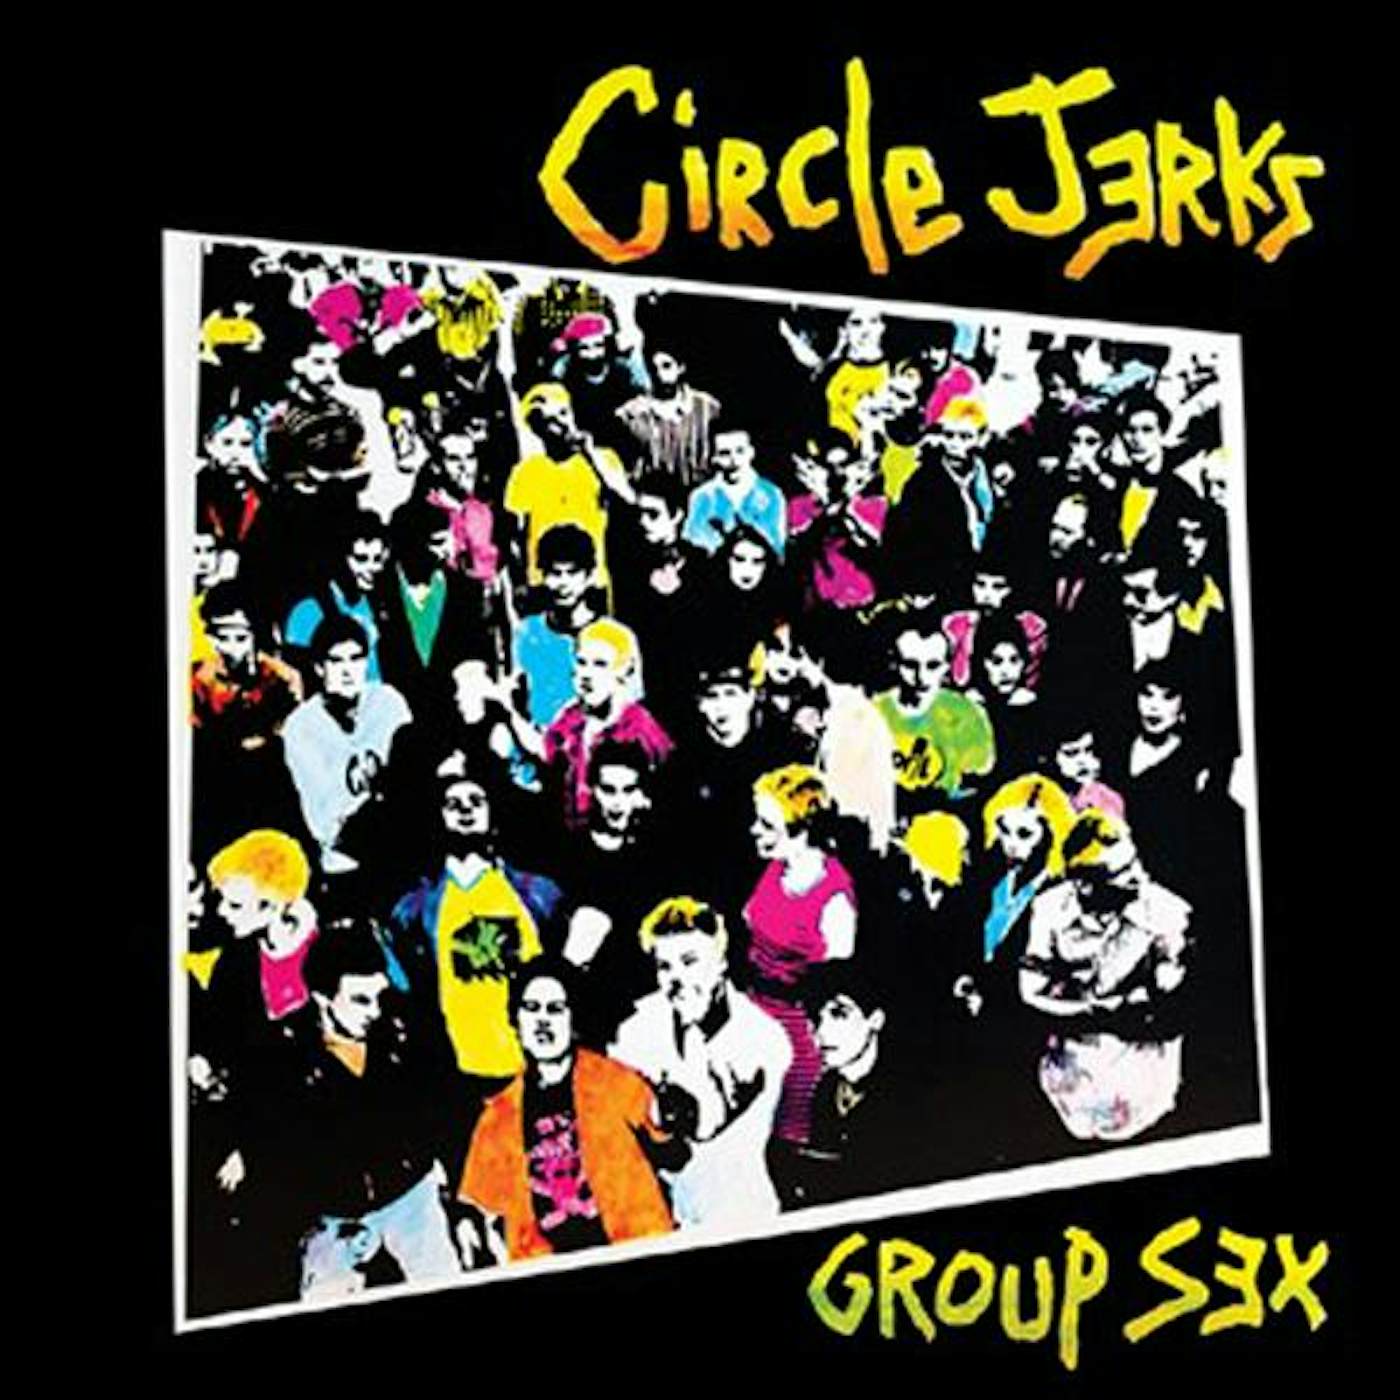 Circle Jerks Group Sex 40th Anniversary Edition Vinyl Record